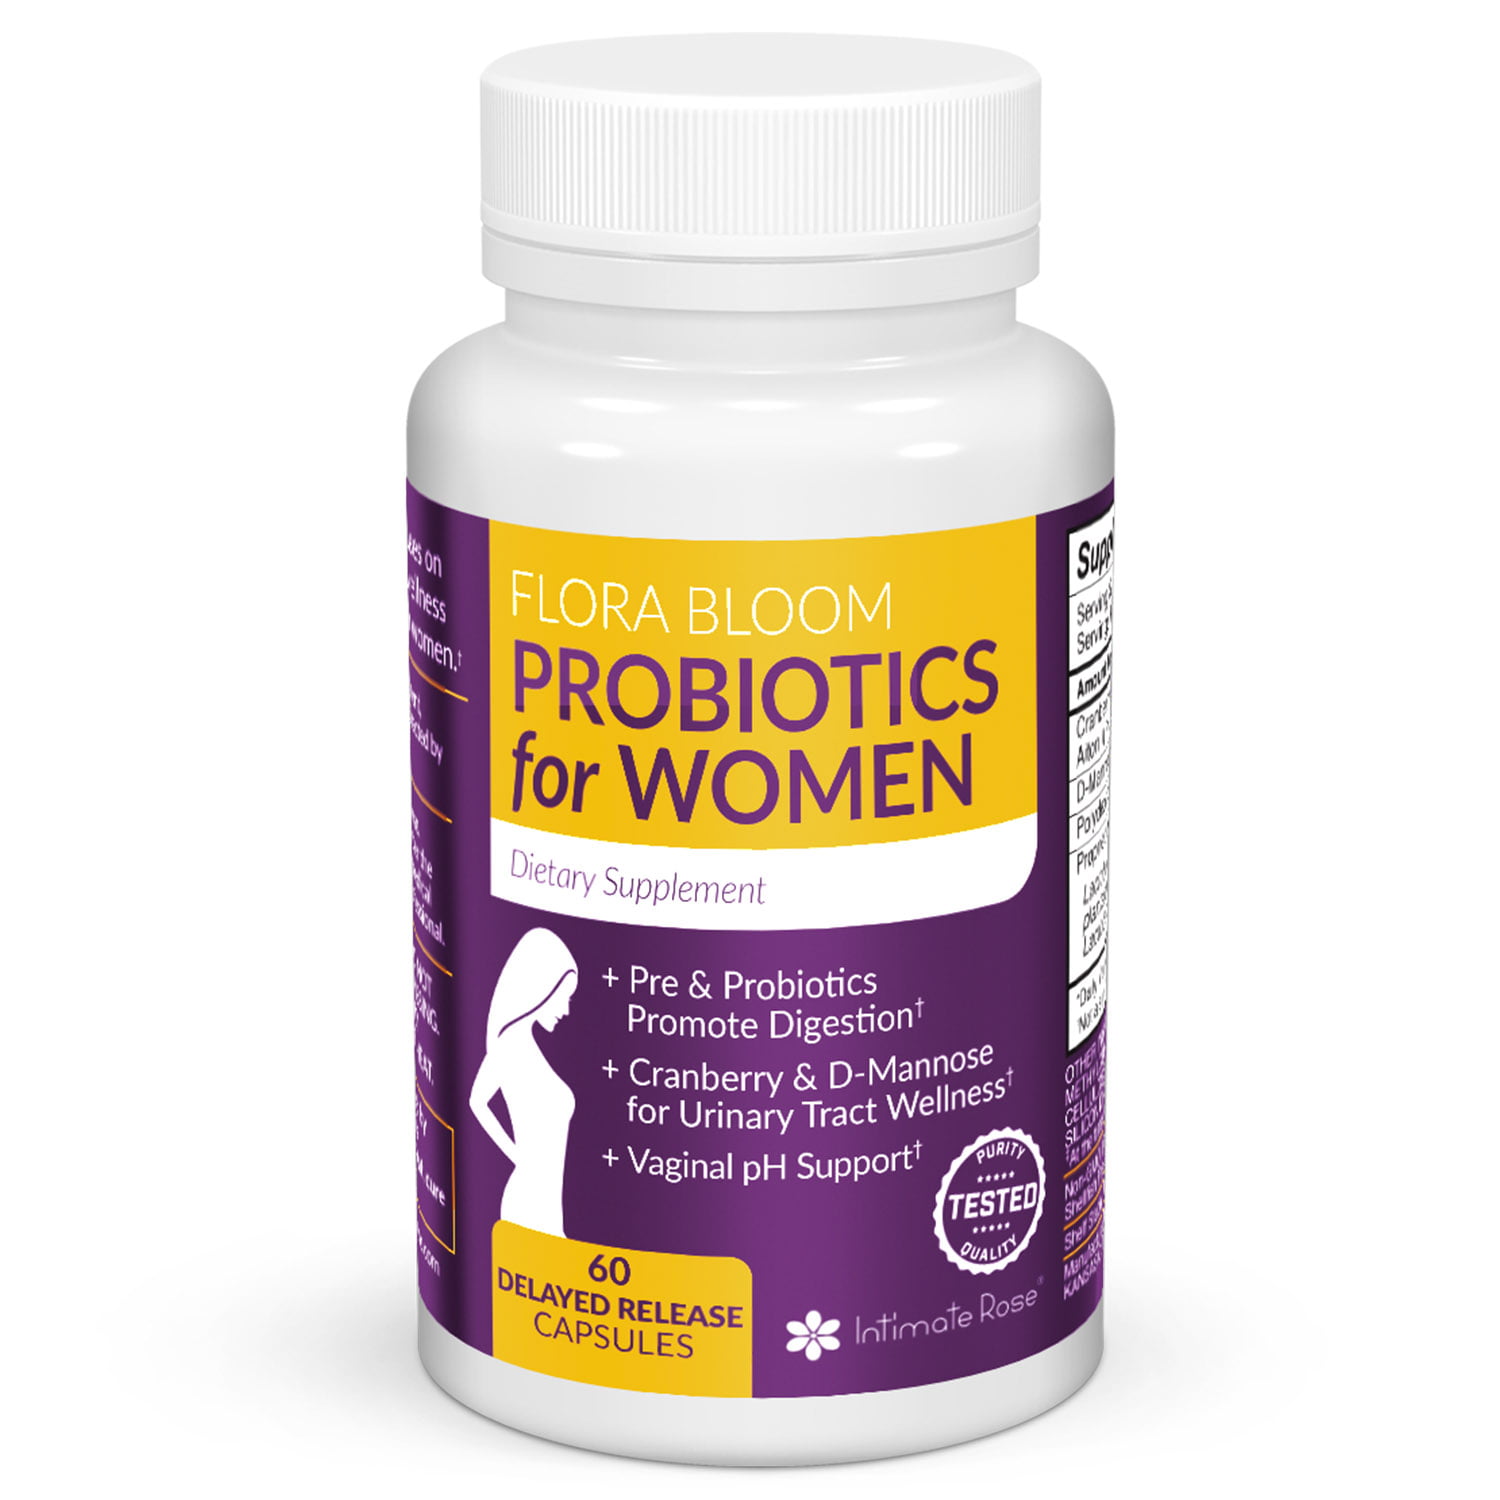 Should You Take Probiotics? - Harvard Health